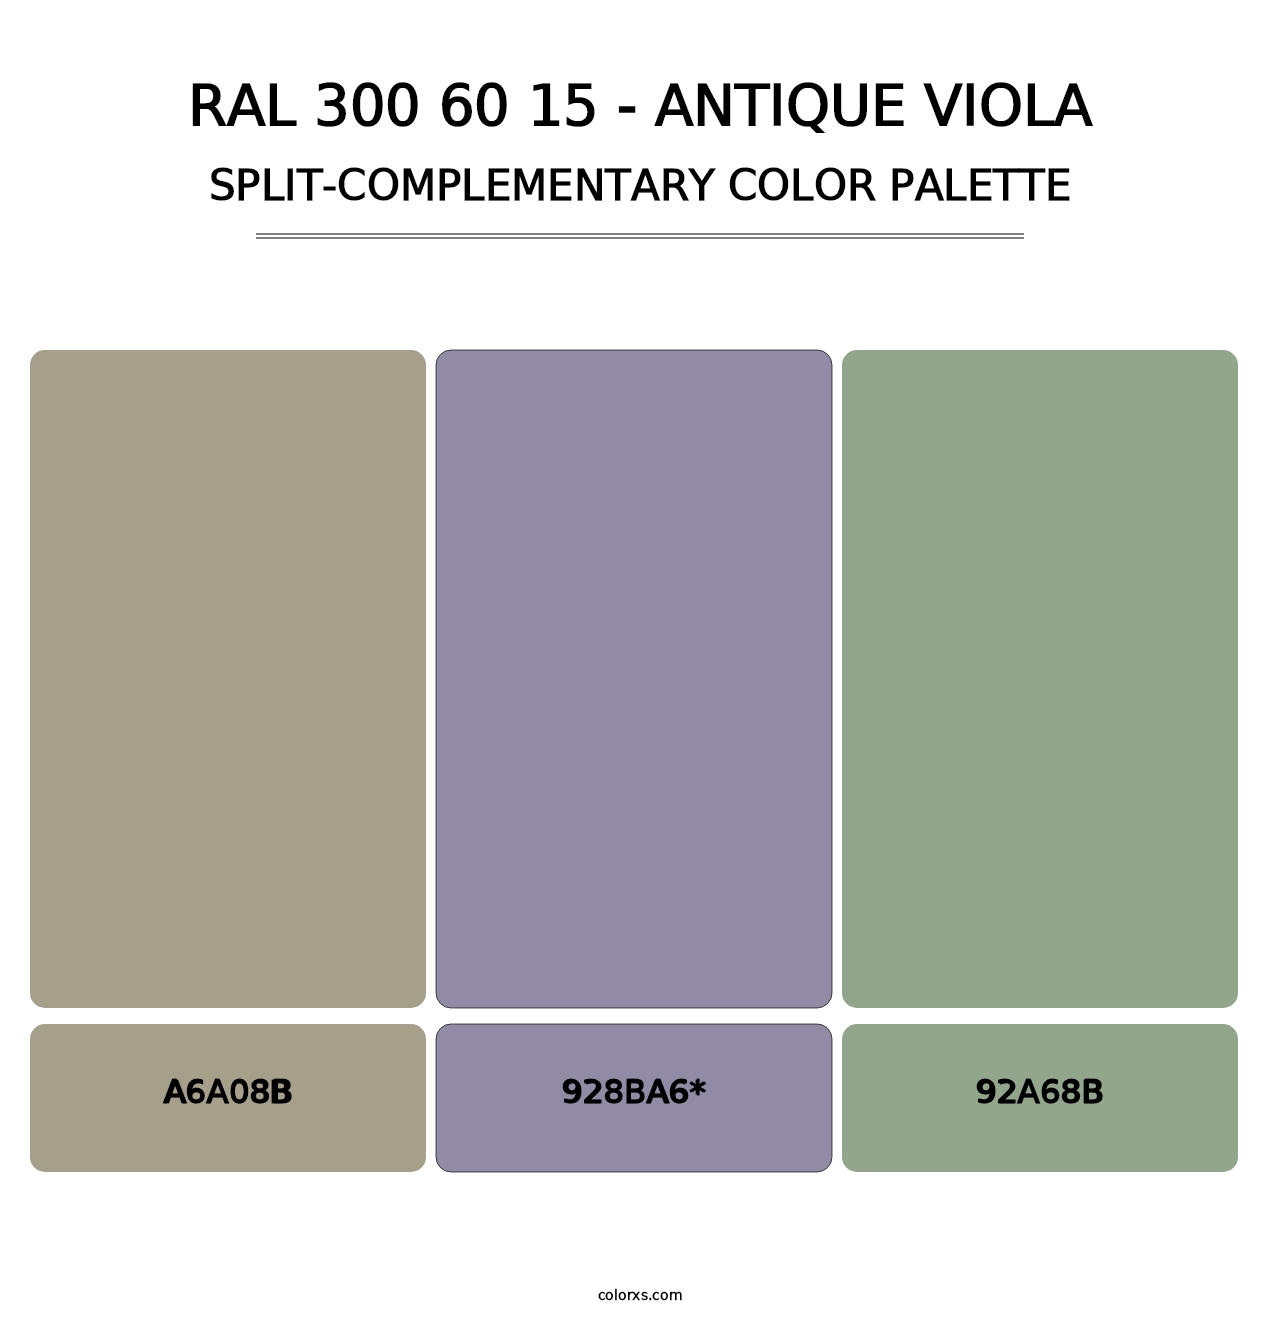 RAL 300 60 15 - Antique Viola - Split-Complementary Color Palette